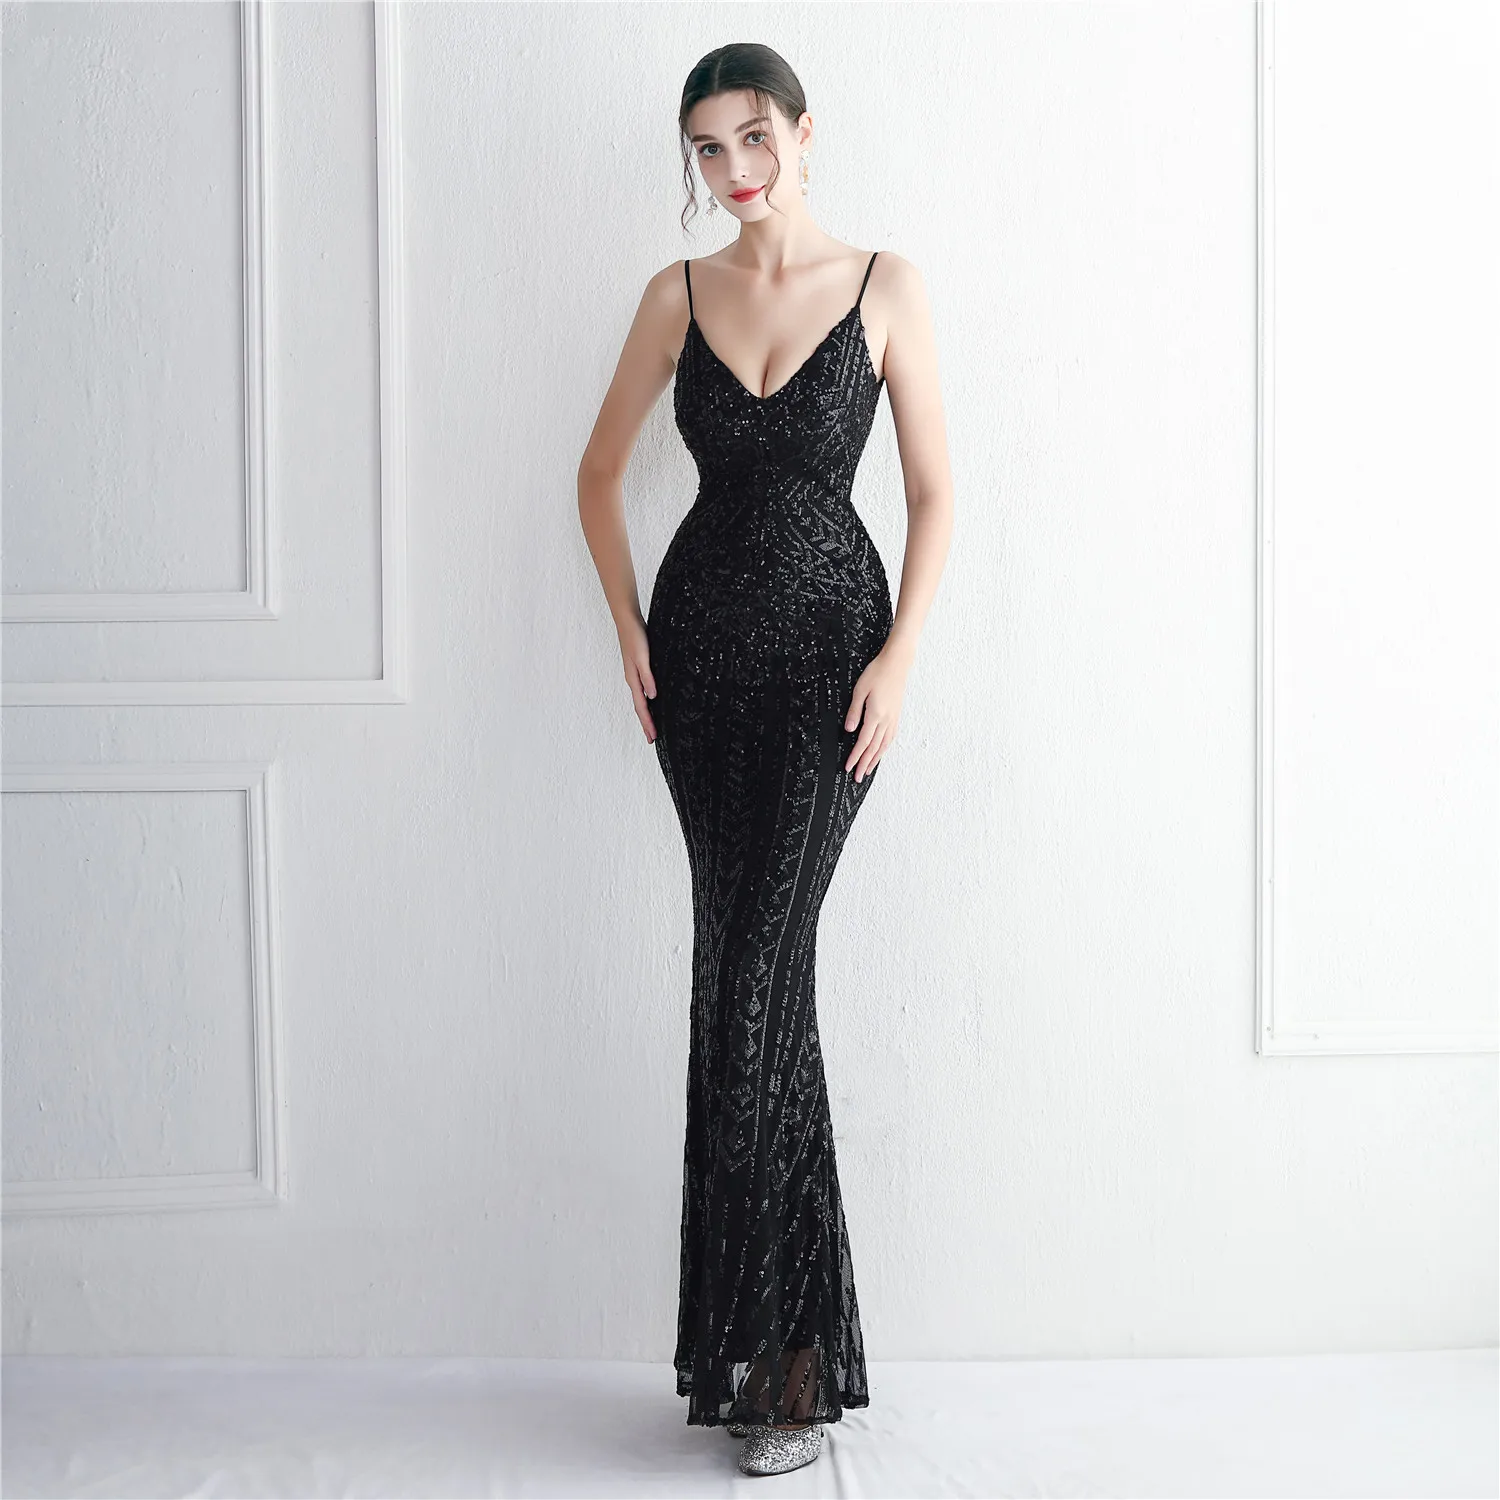 Women's Black Long Sleeve Padded Strap Sequin Dress Length, Sparkles Stretch, V Neck Mermaid, Formal Evening Dress, Night Party цена и фото